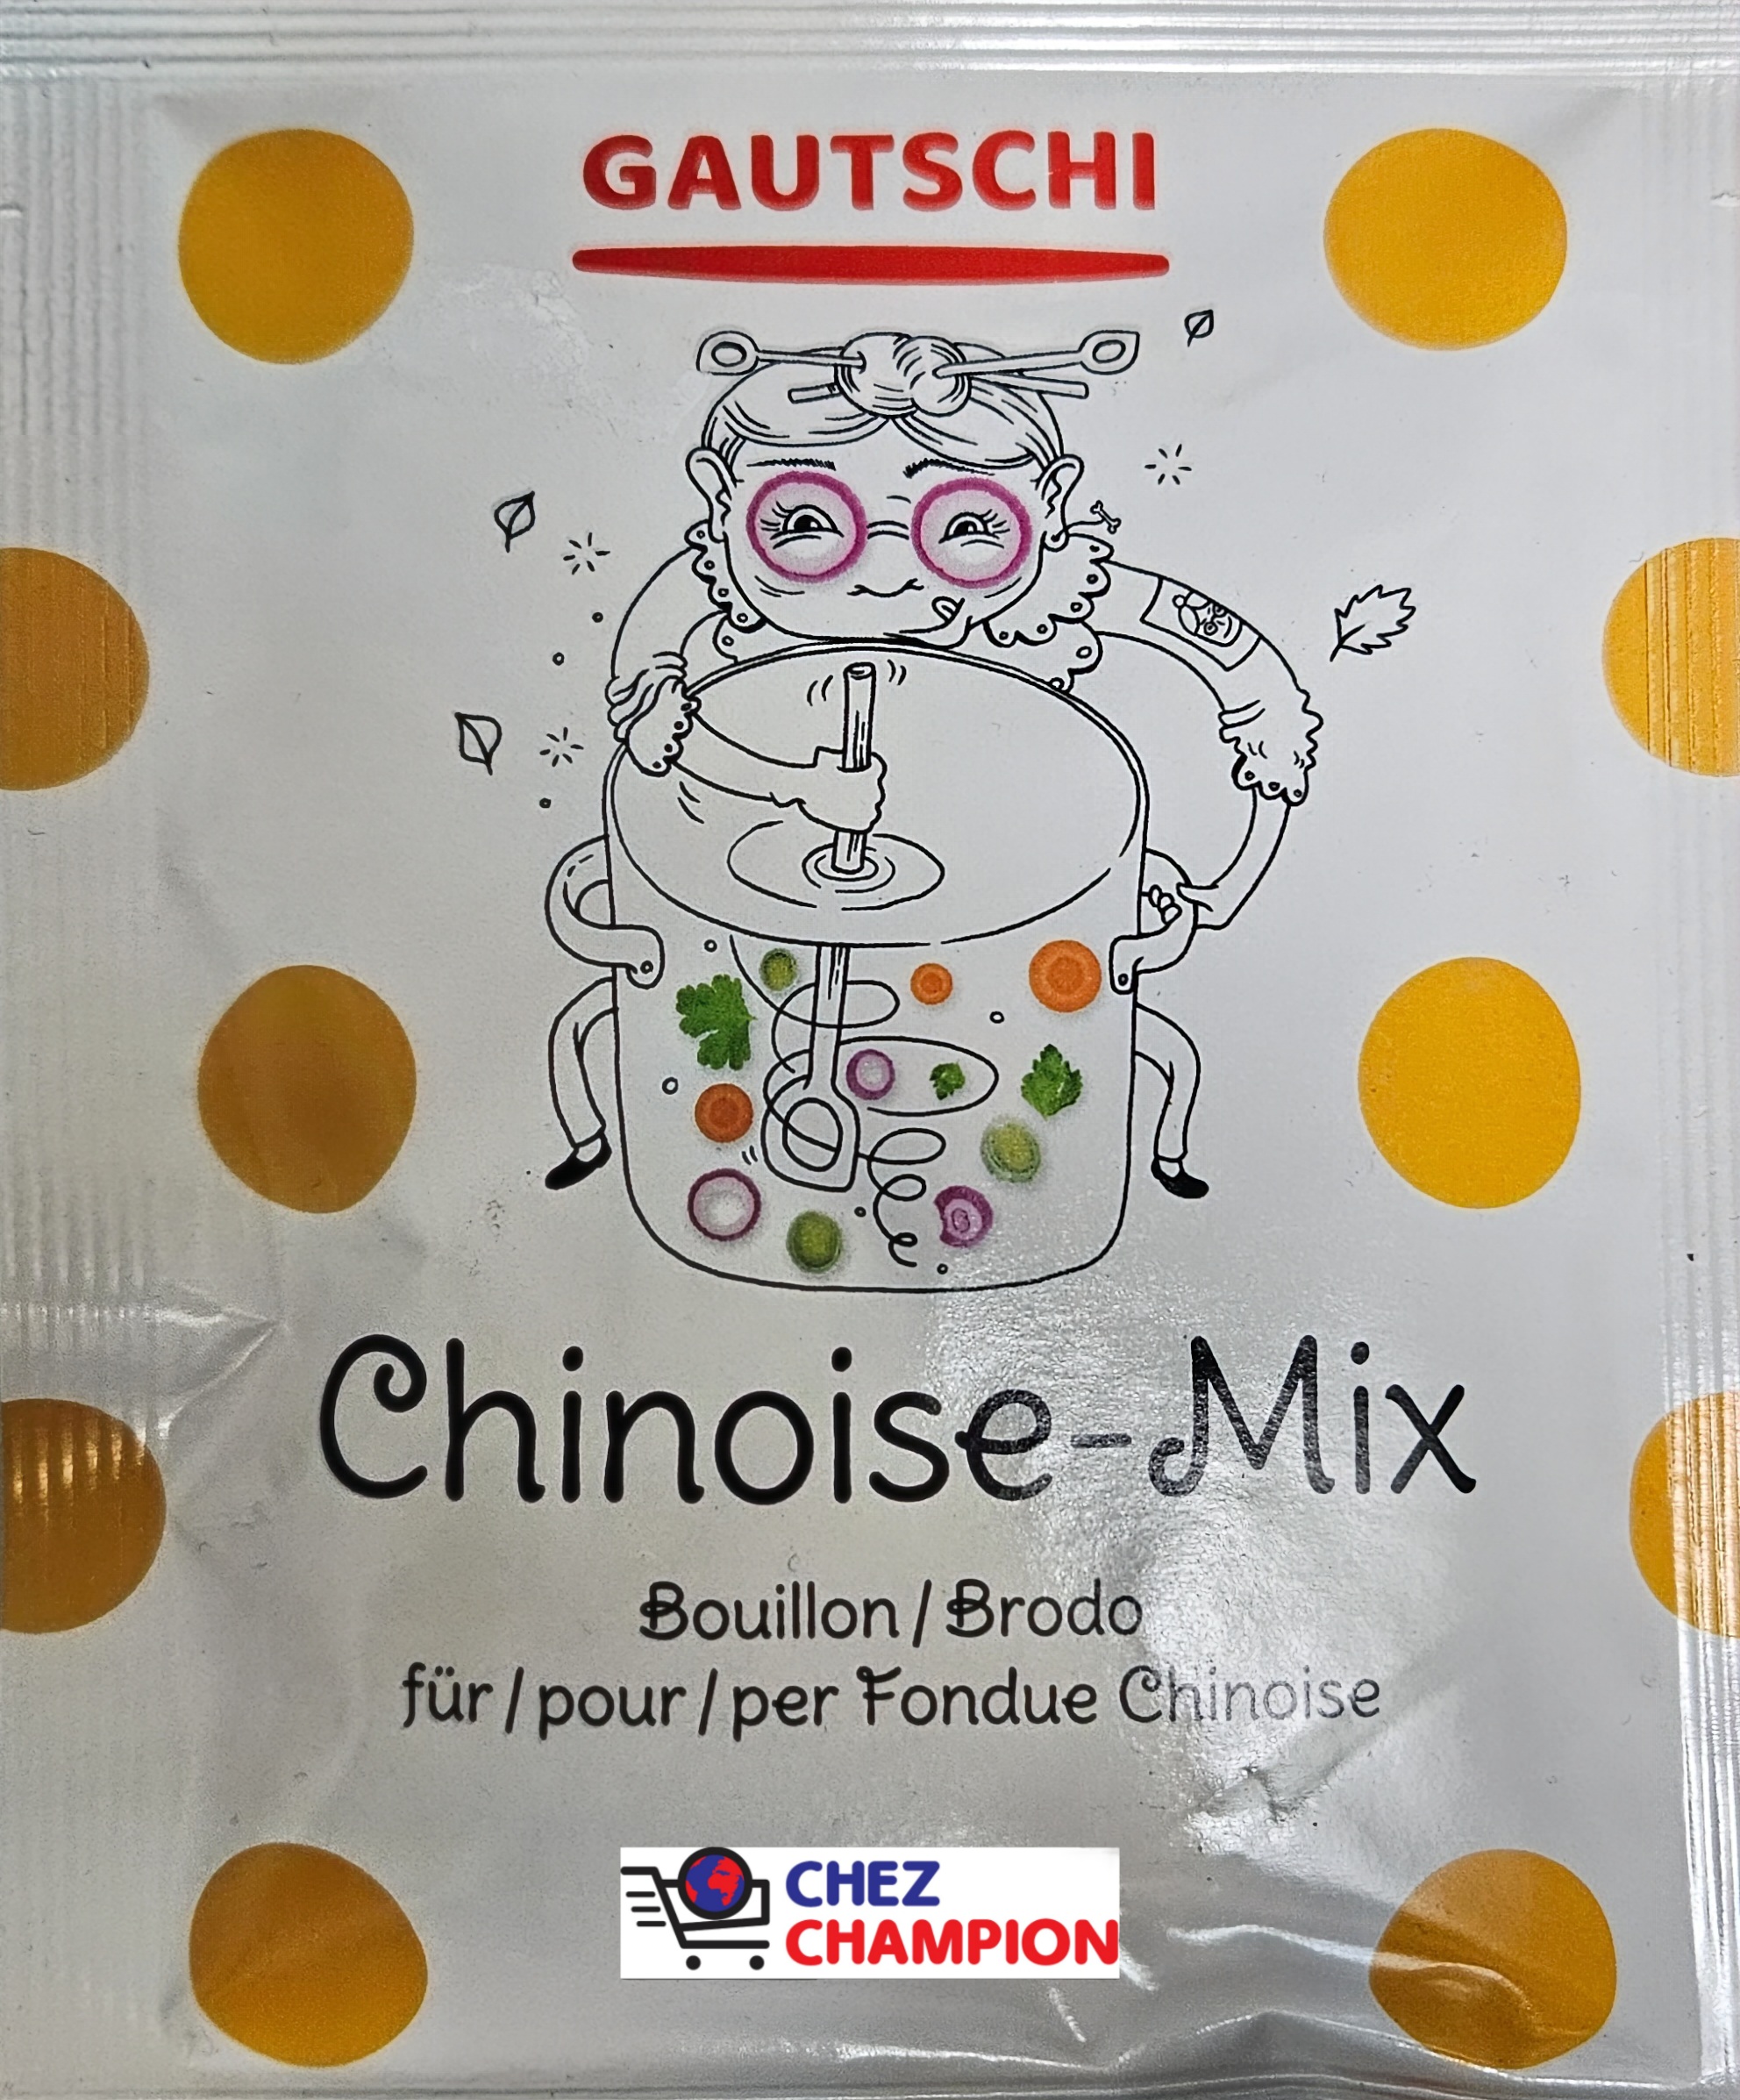 Gautschi chinoise-mix bouillon pour fondue chinoise – 47g